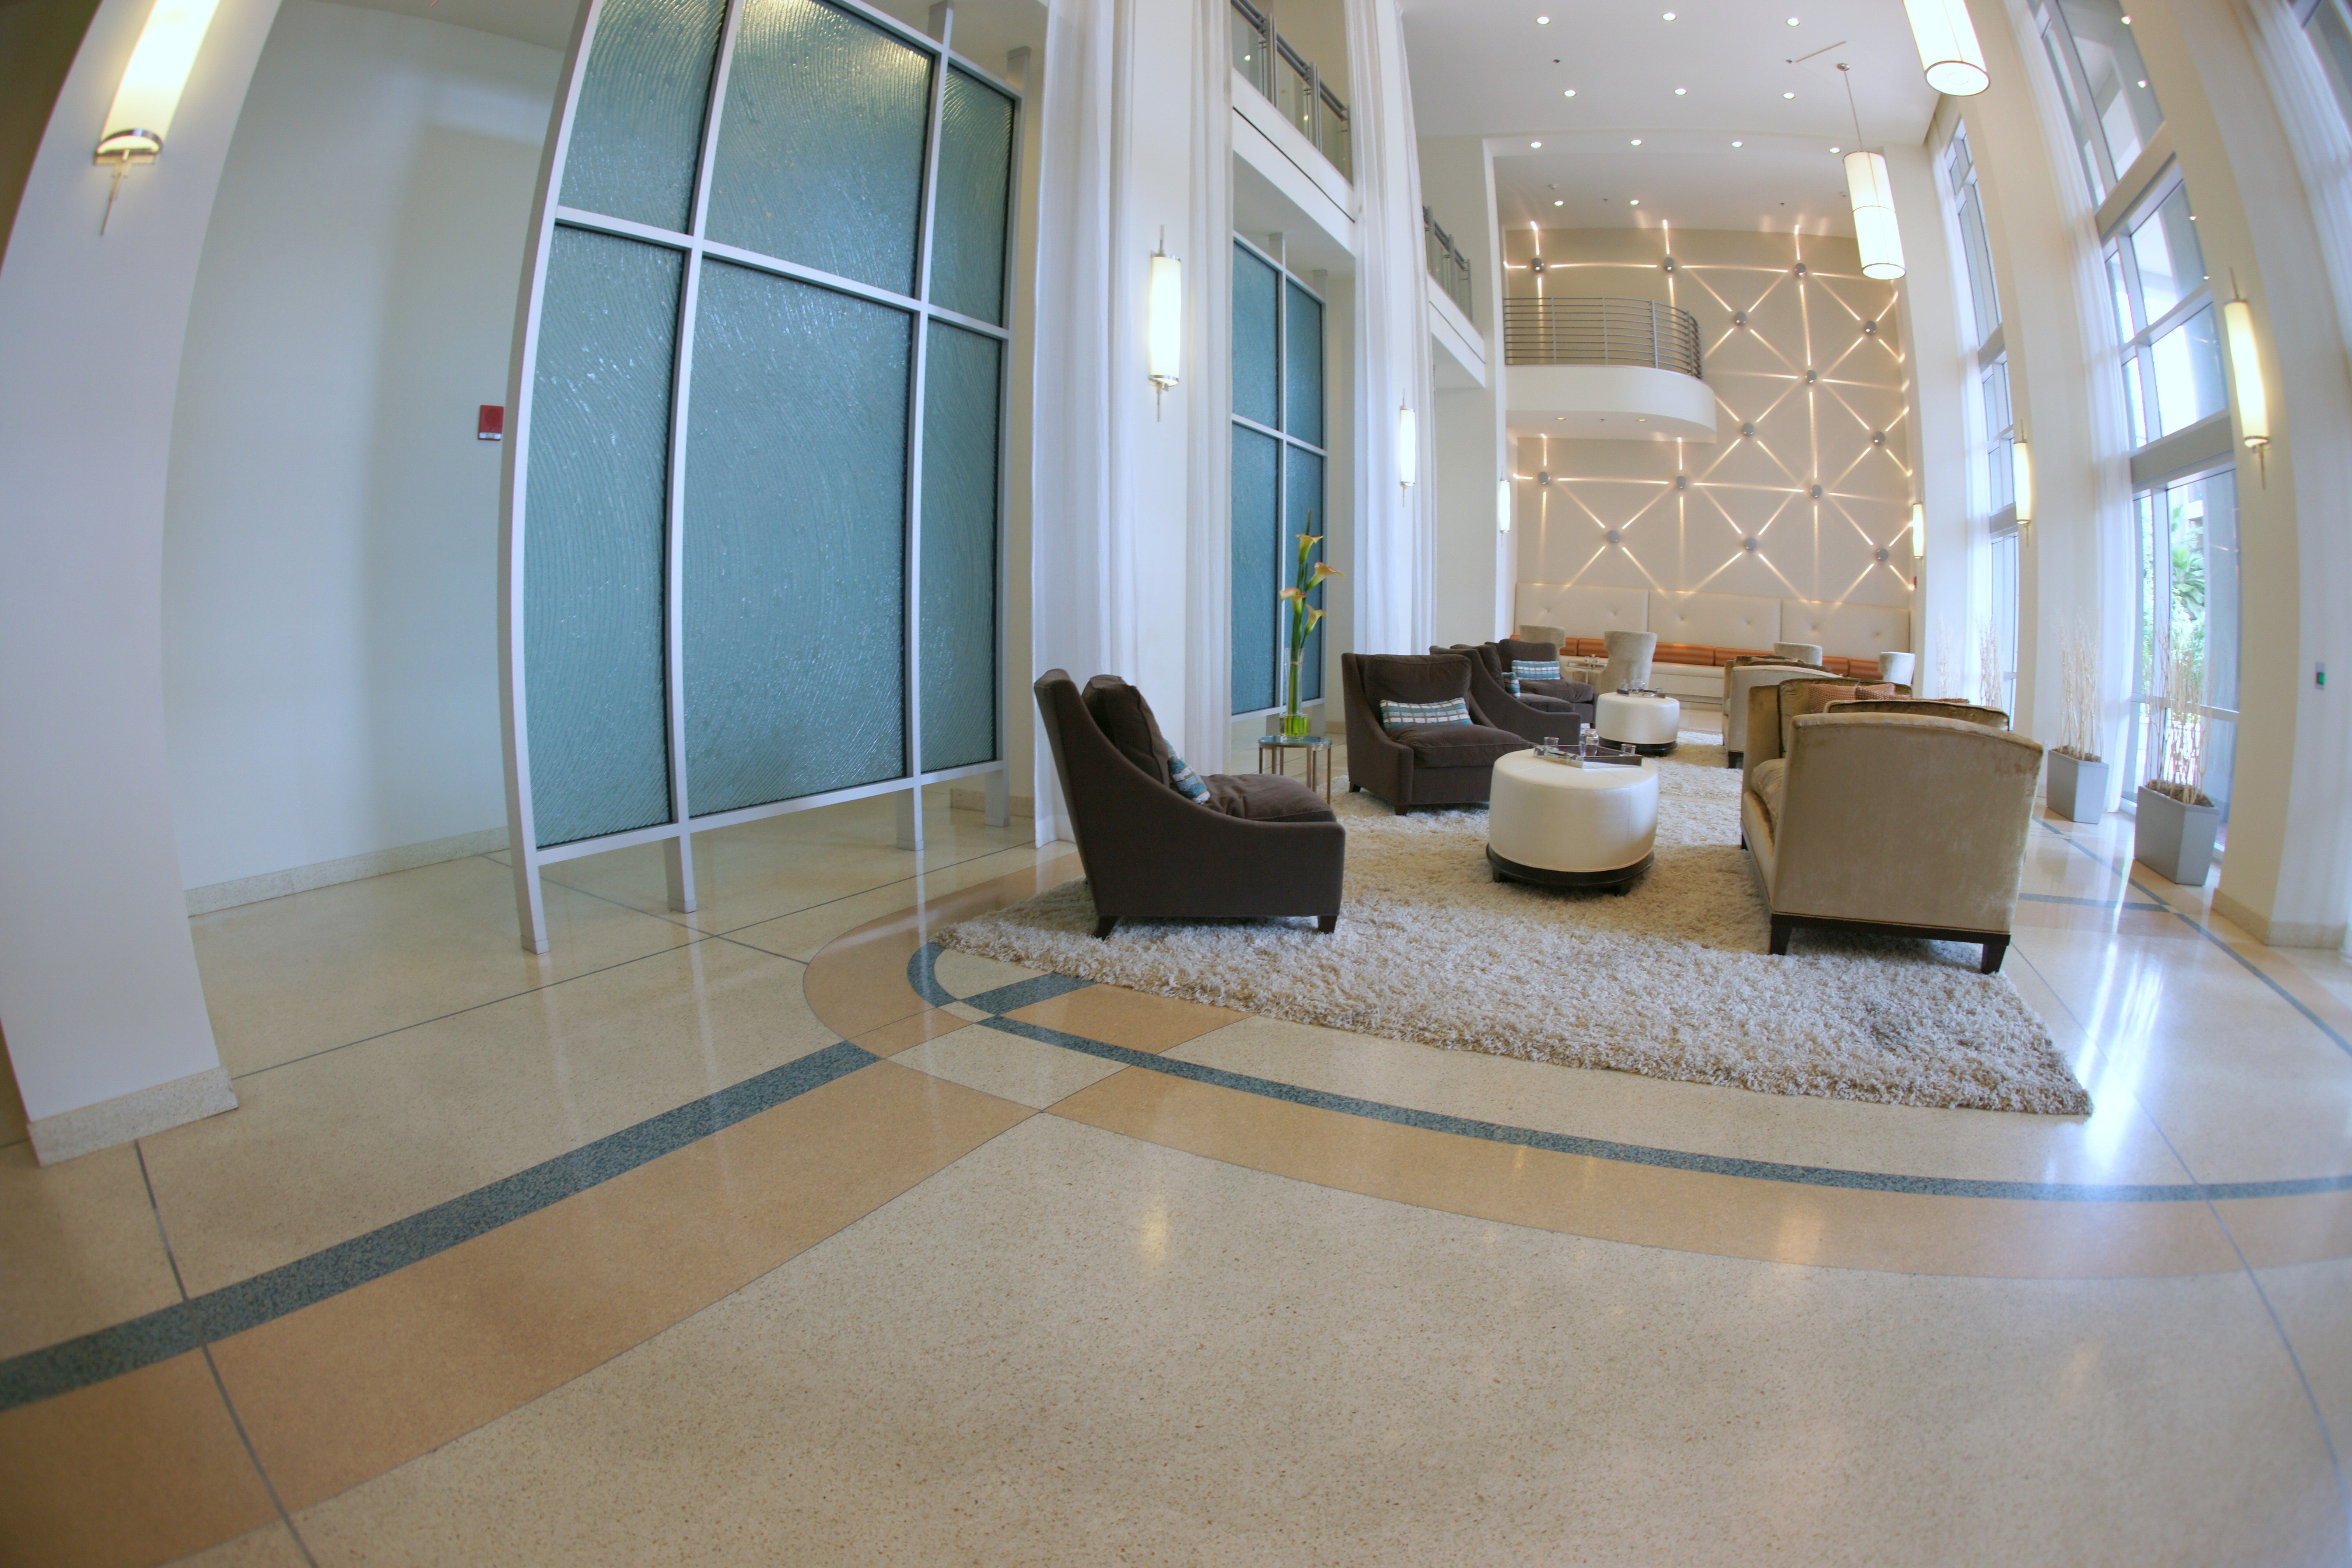 Hotel Lobby The Paramount 500 with terrazzo flooring